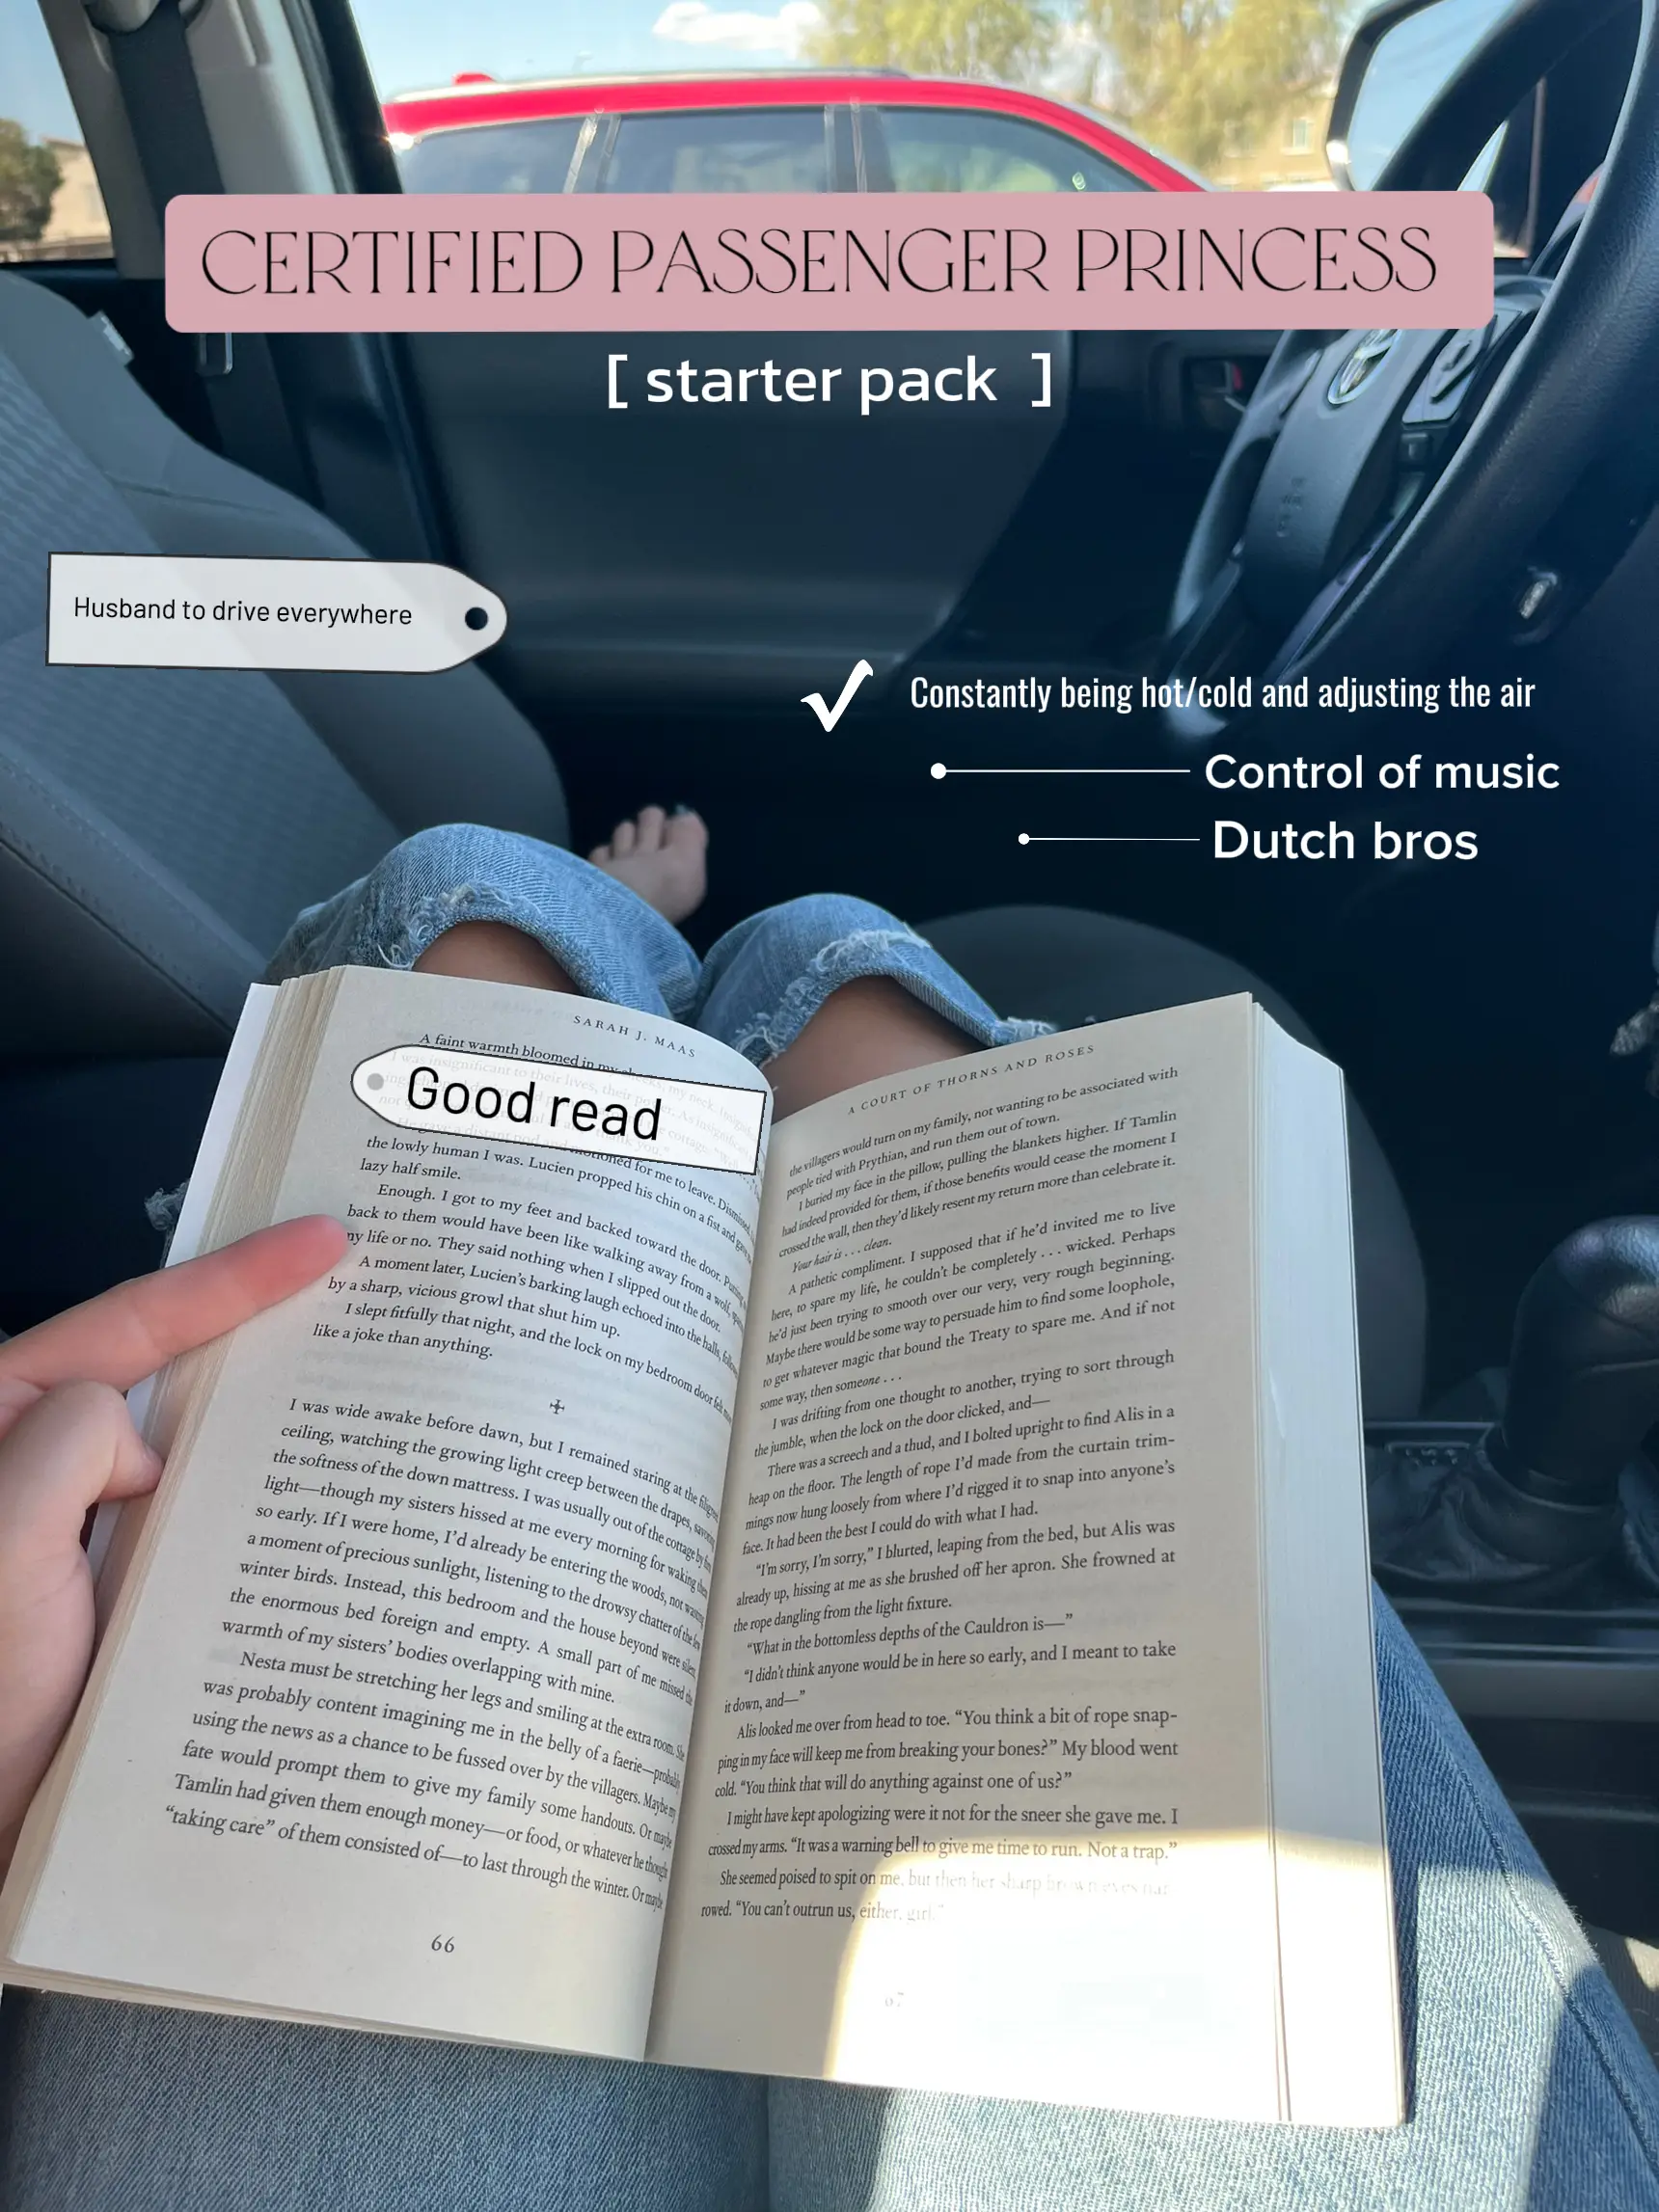 Passenger Princess Quote Car Air Freshener – Prints by Mee